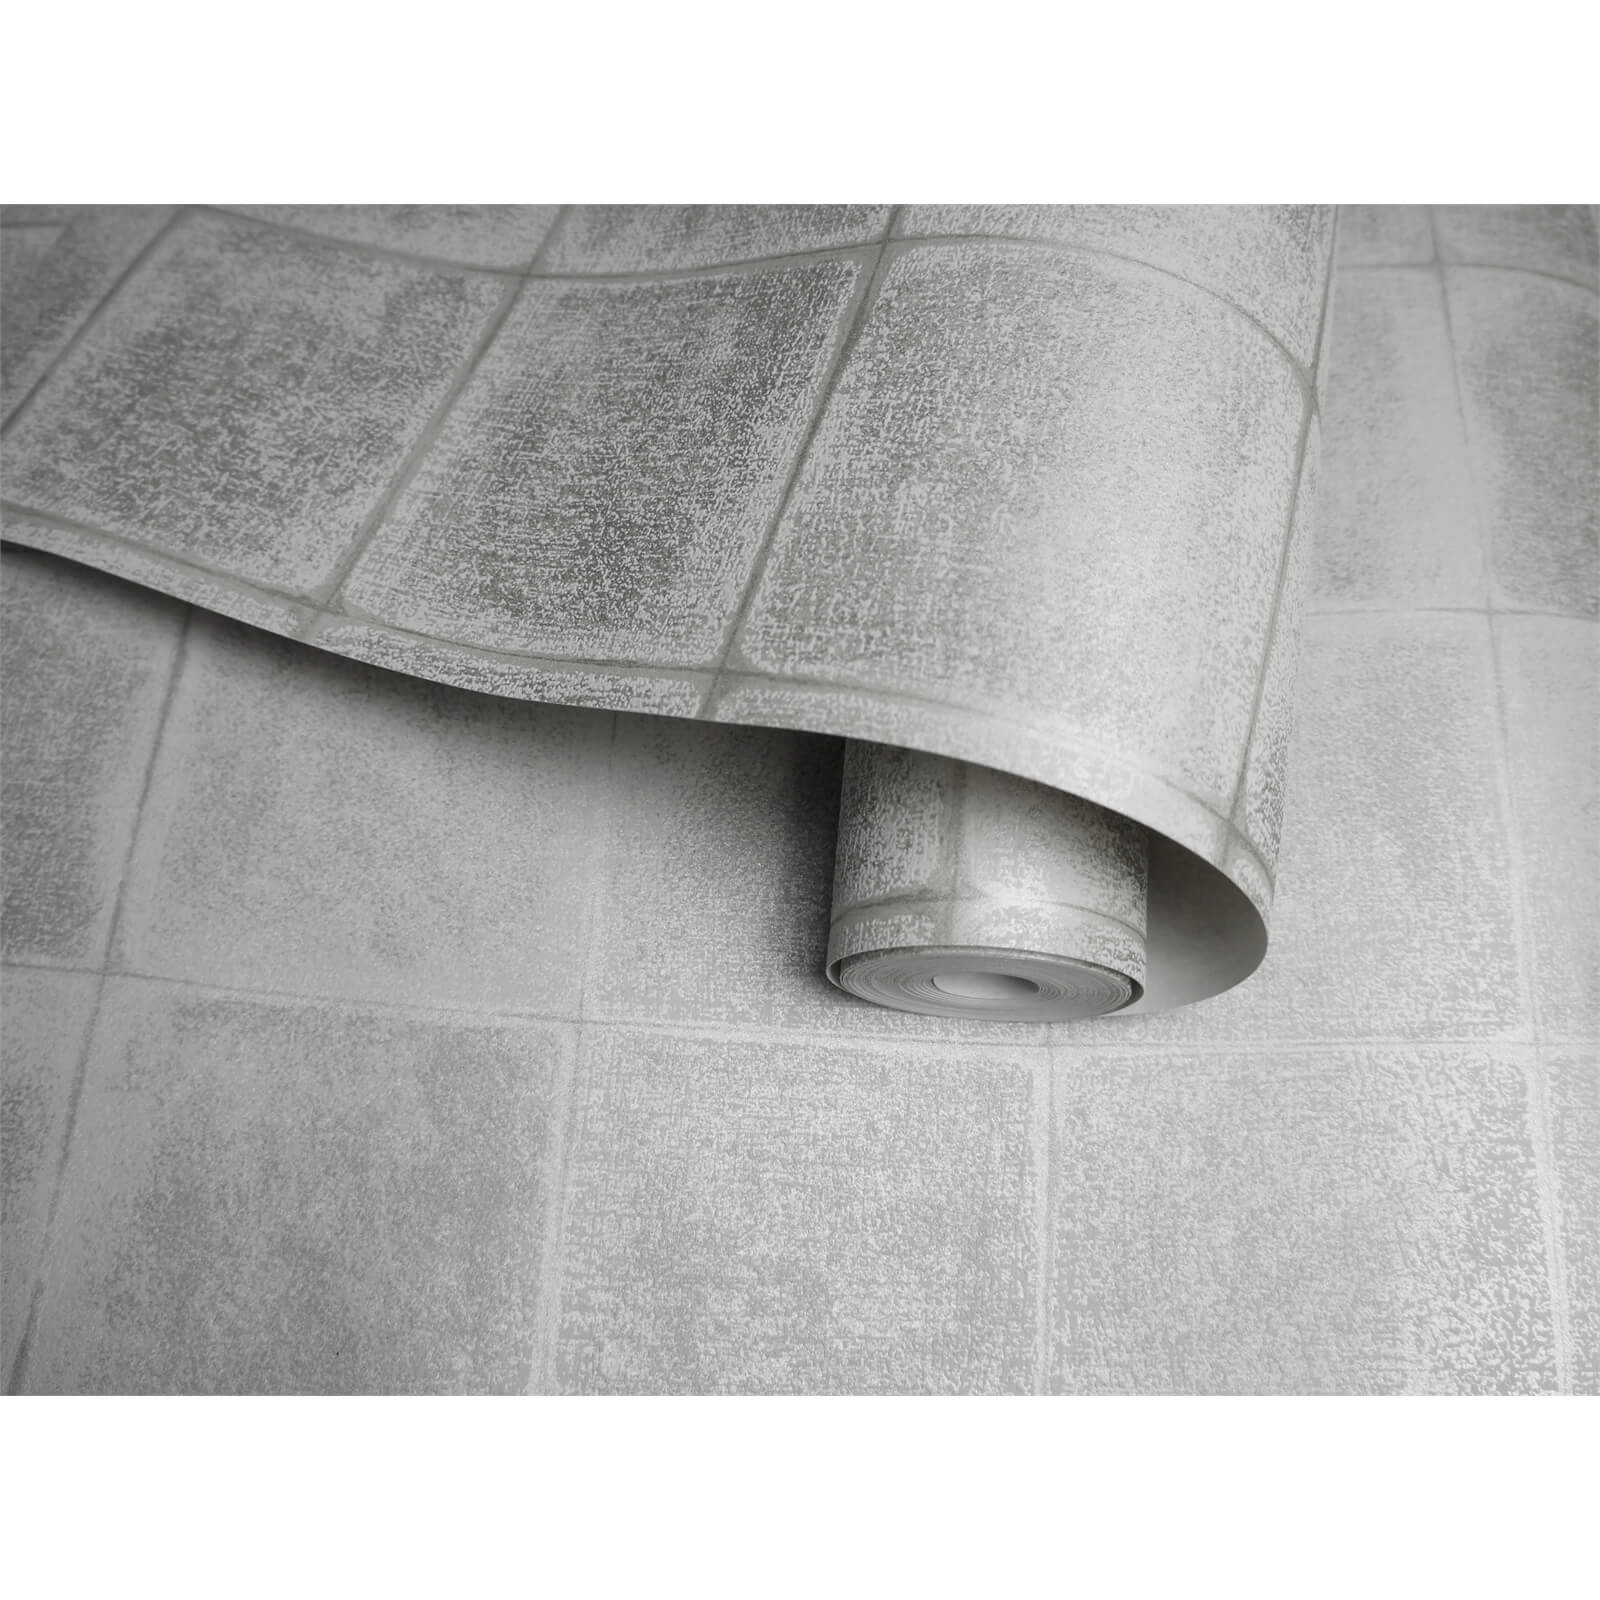 Holden Decor Furano Tile Textured Metallic Grey Wallpaper